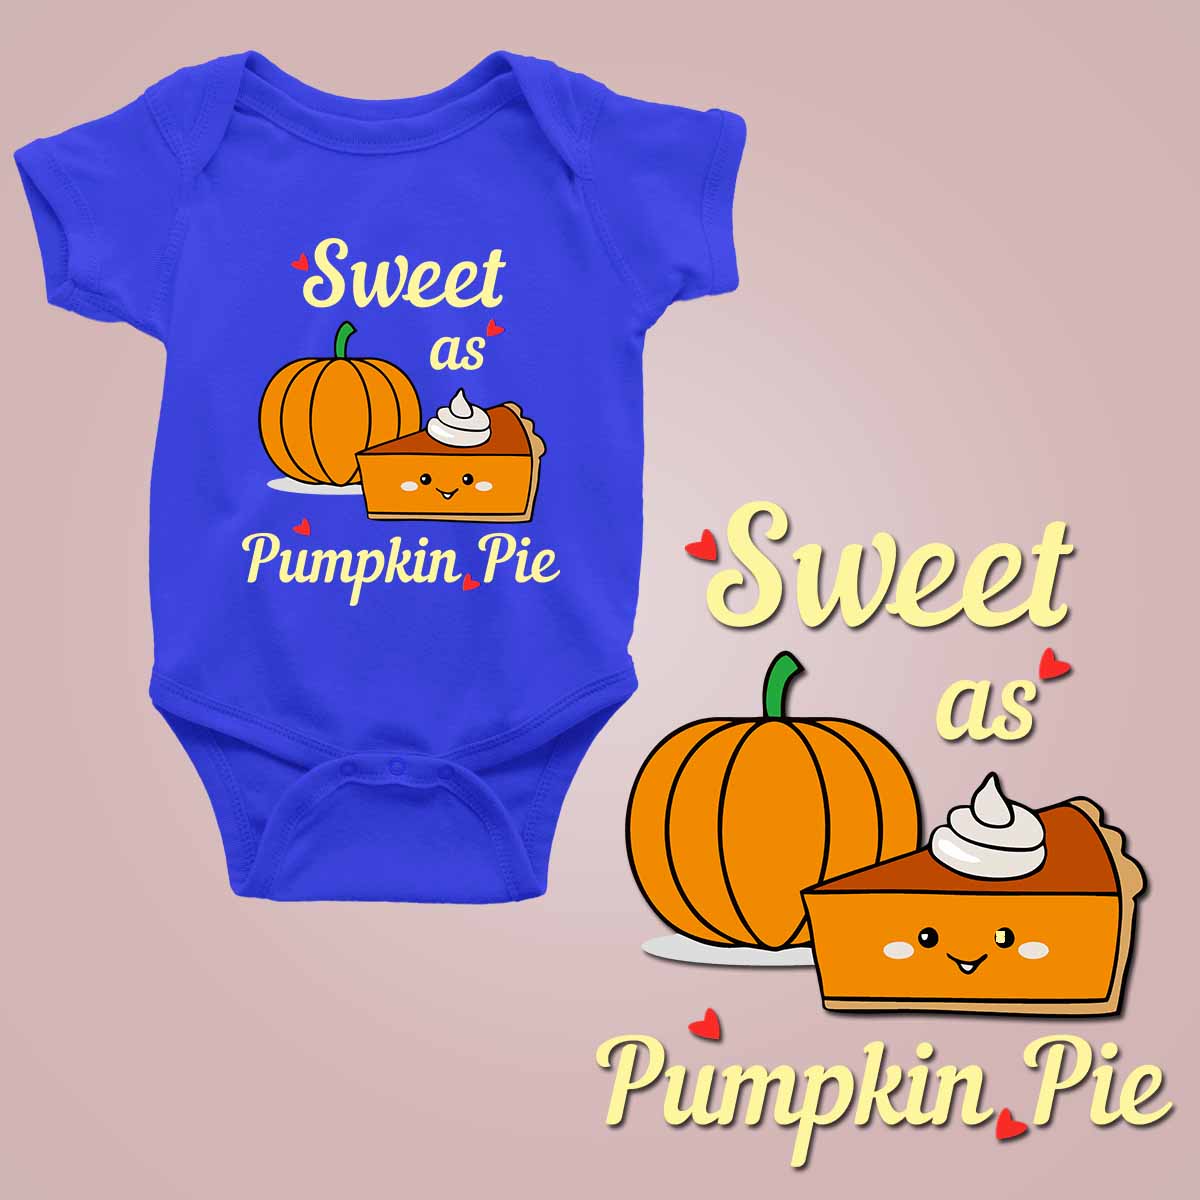 Sweet as pumpkin pie royal blue